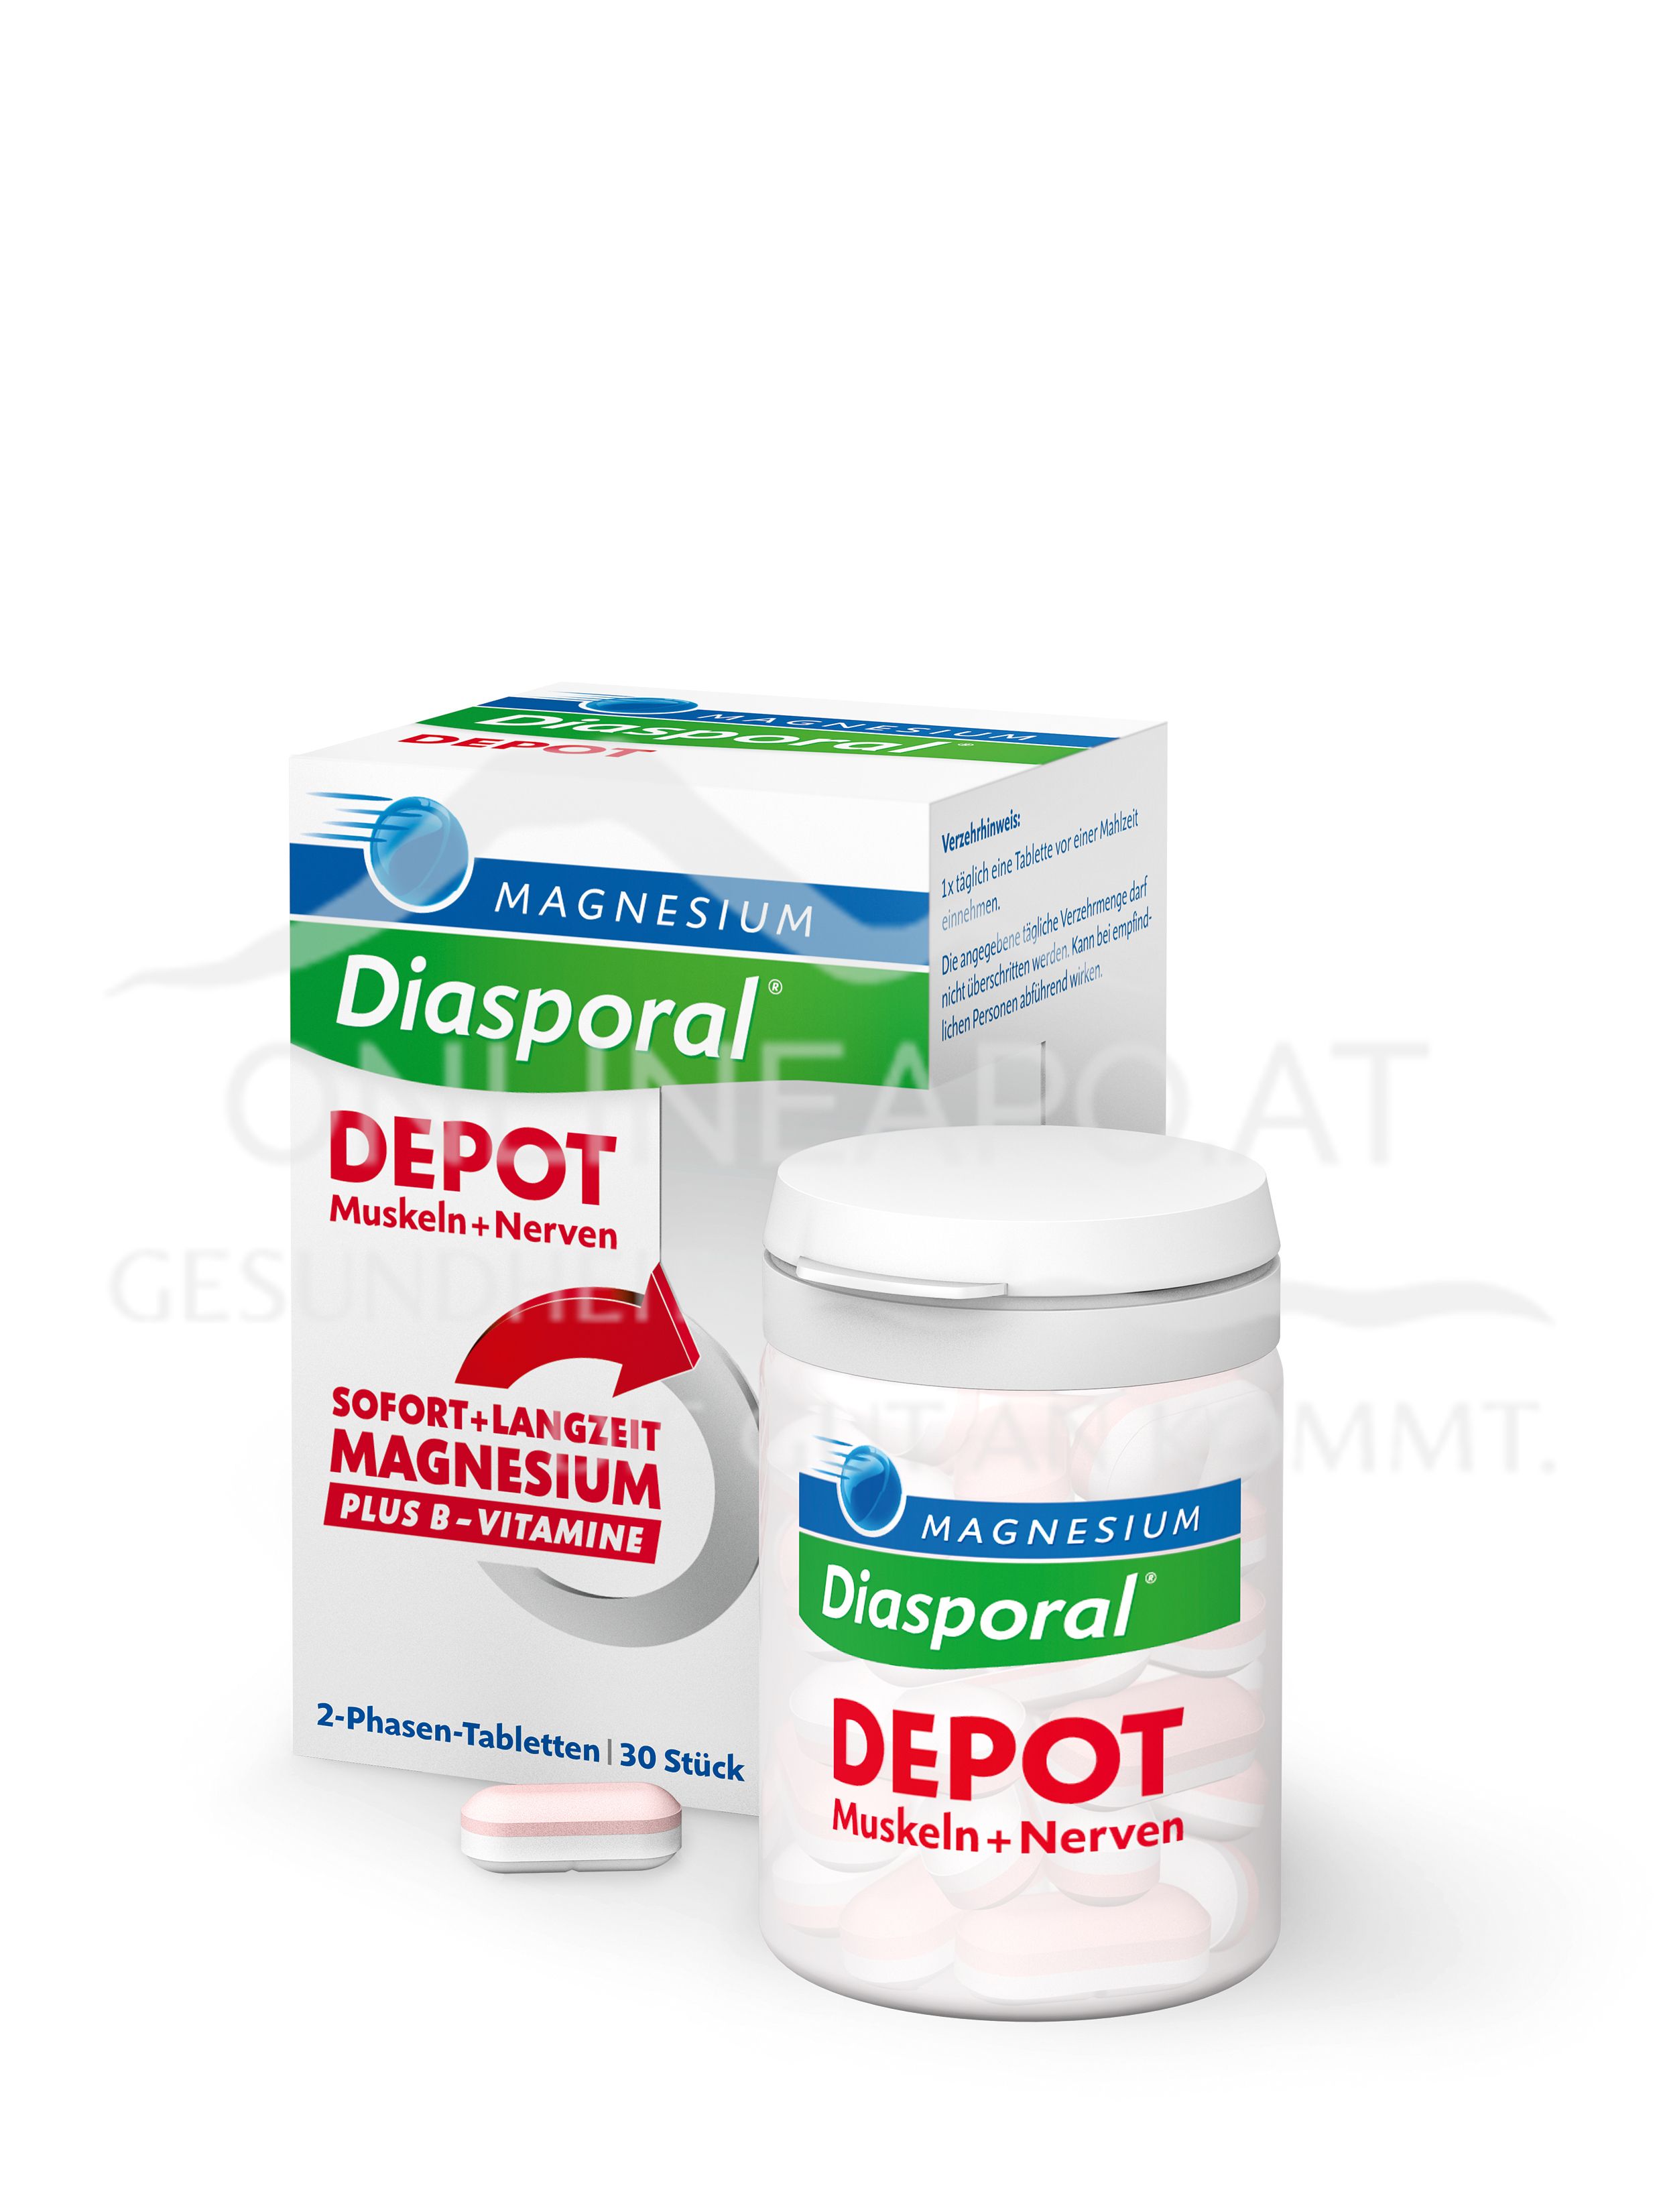 Magnesium Diasporal DEPOT Muskel + Nerven 2-Phasen-Tabletten